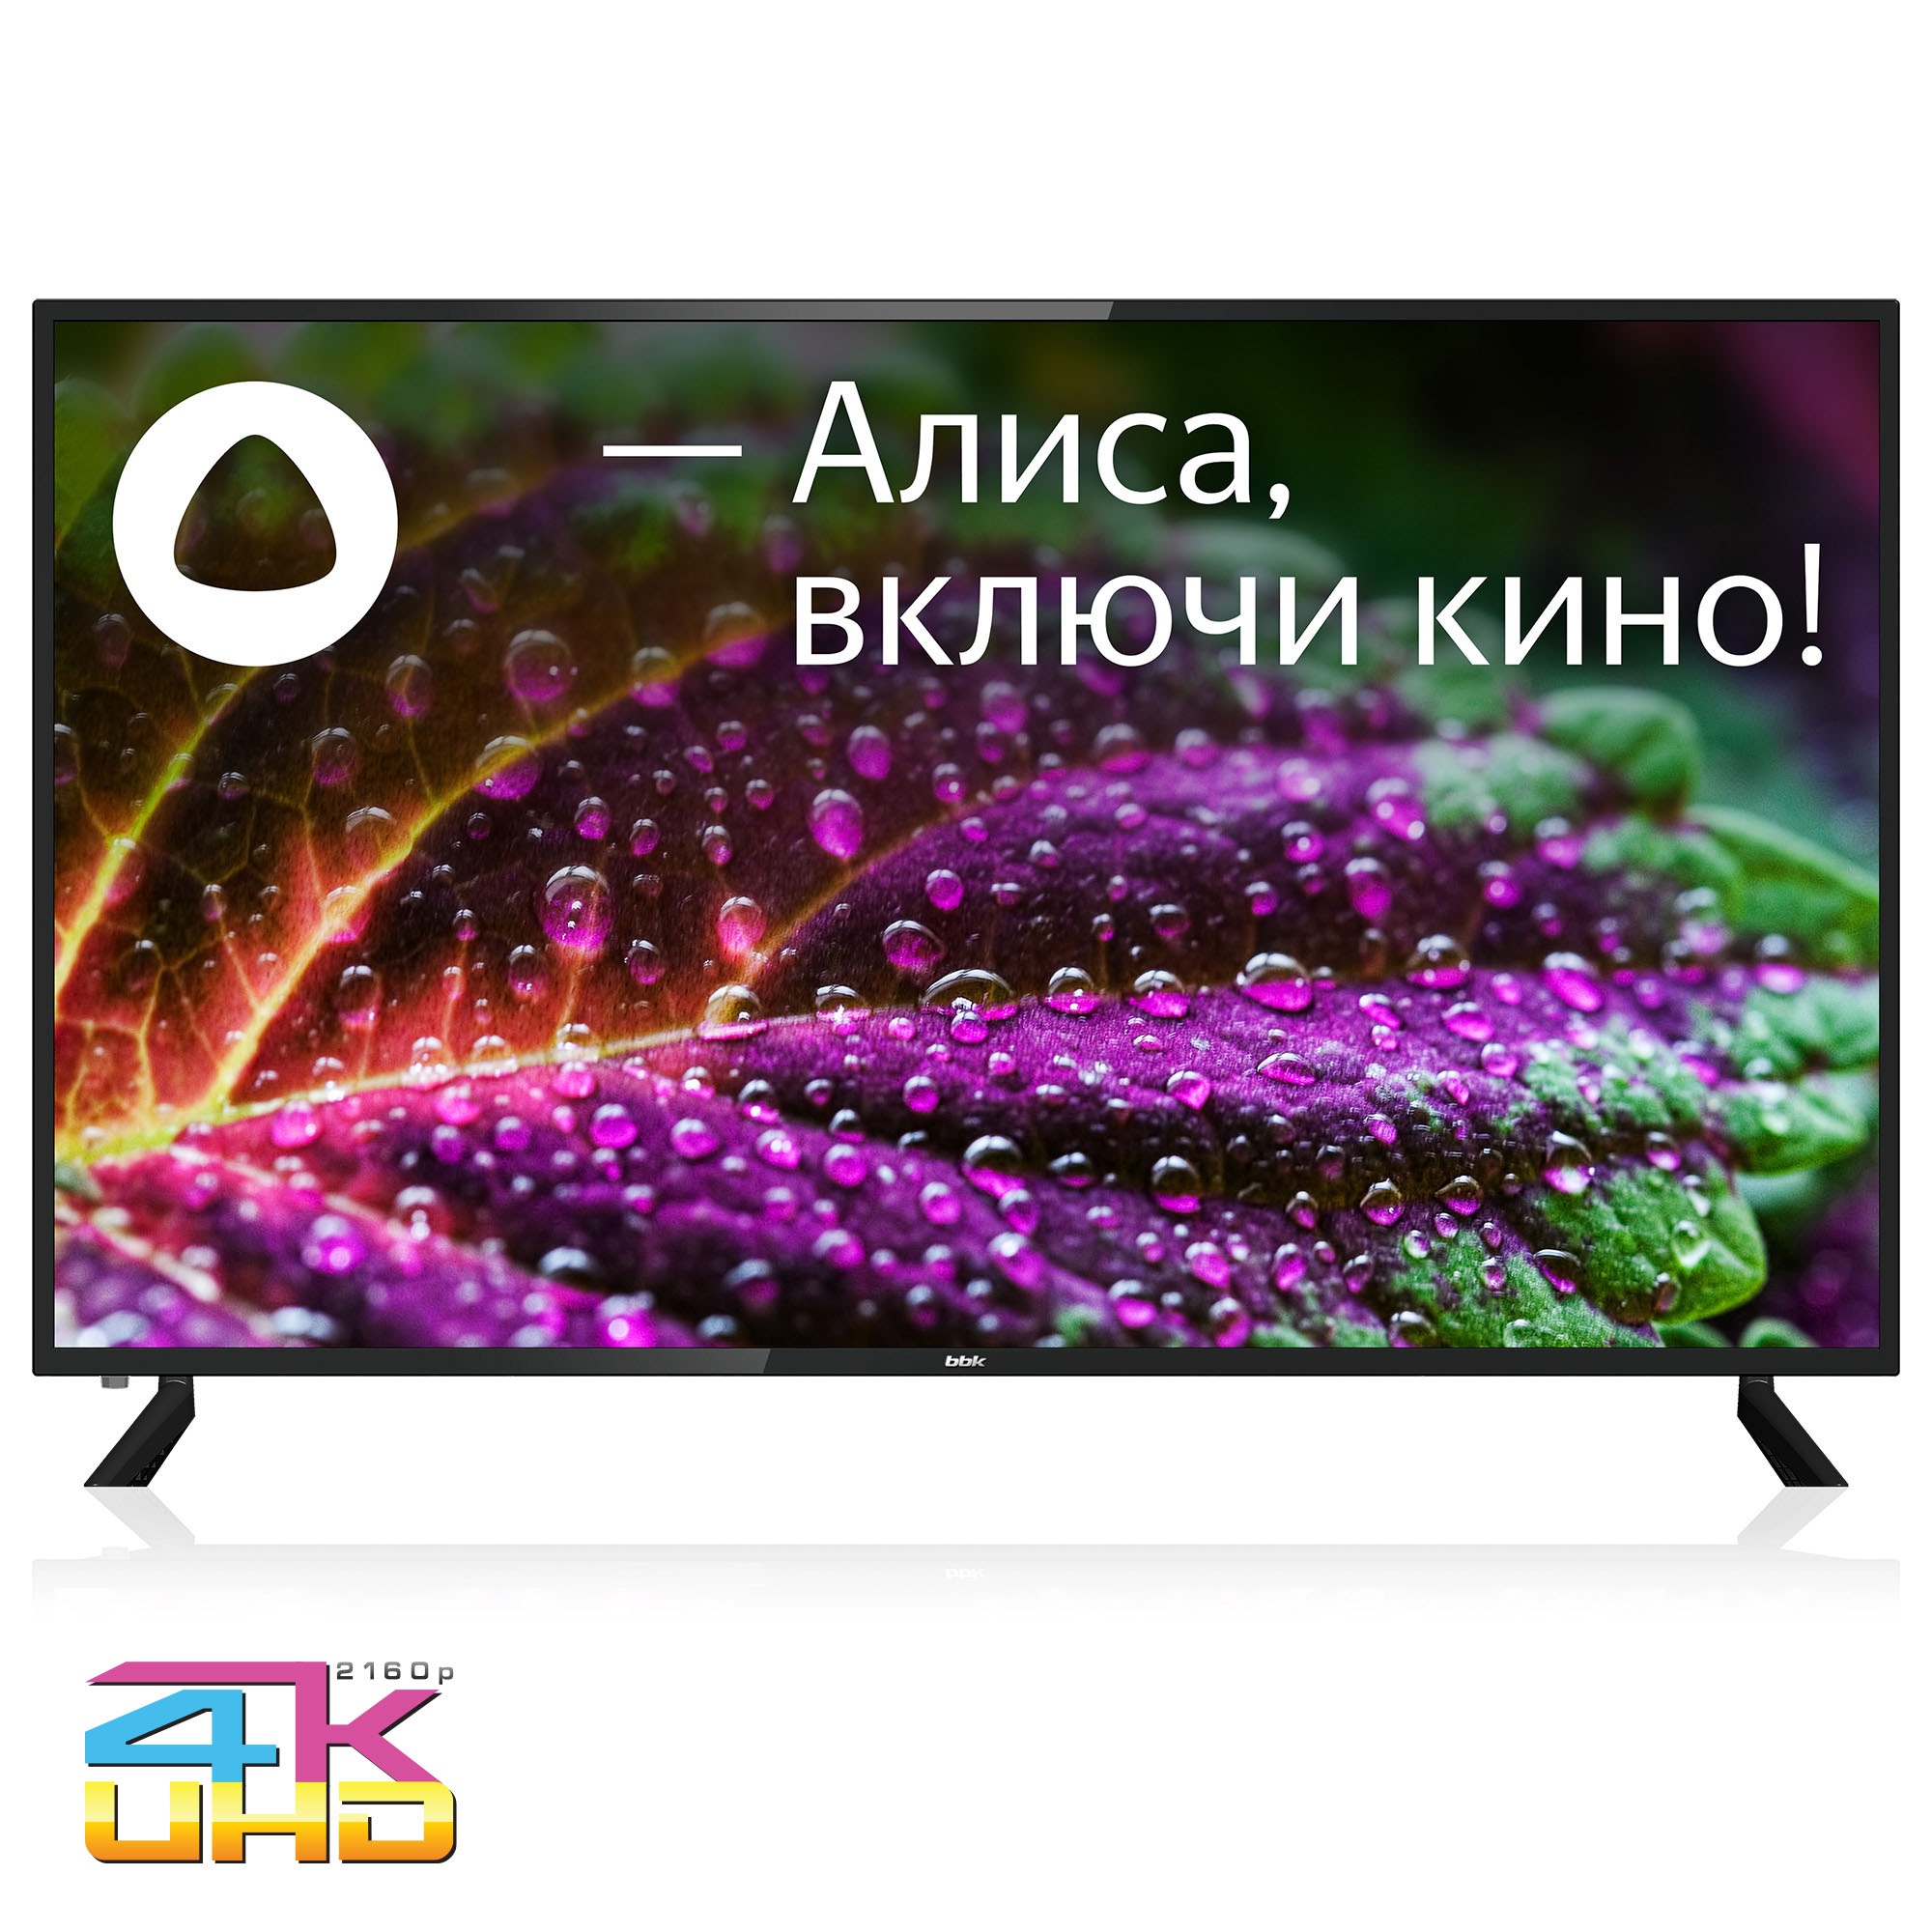 Телевизор BBK 65LED-9201/UTS2C Яндекс.ТВ черный телевизор led hyundai 40 h led40bs5002 android tv frameless черный full hd 60hz dvb t2 dvb c dvb s dvb s2 usb wifi smart tv